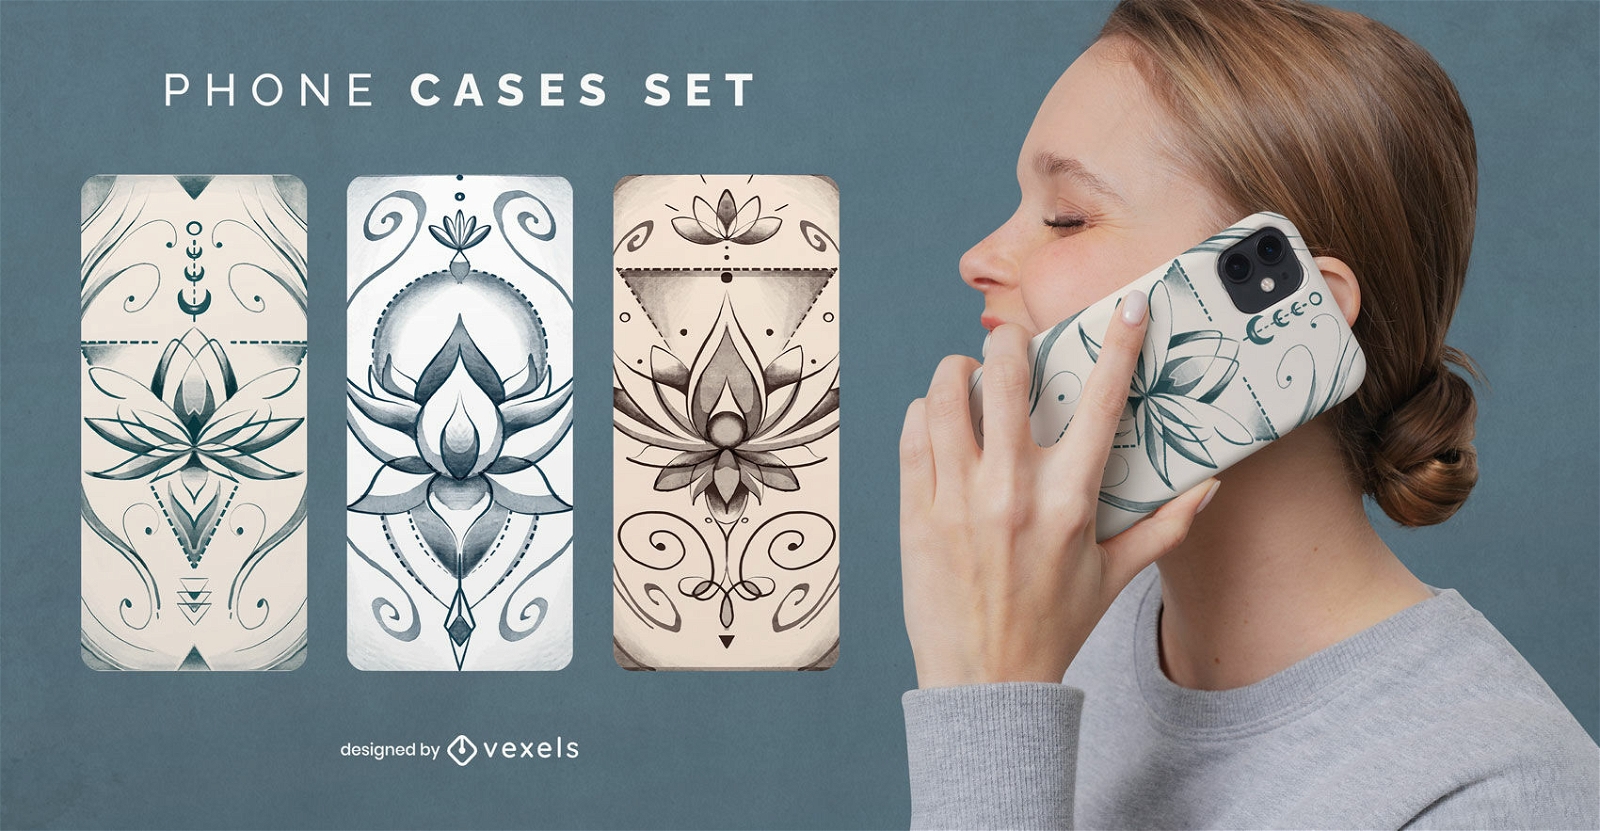 Lotus phone cases set